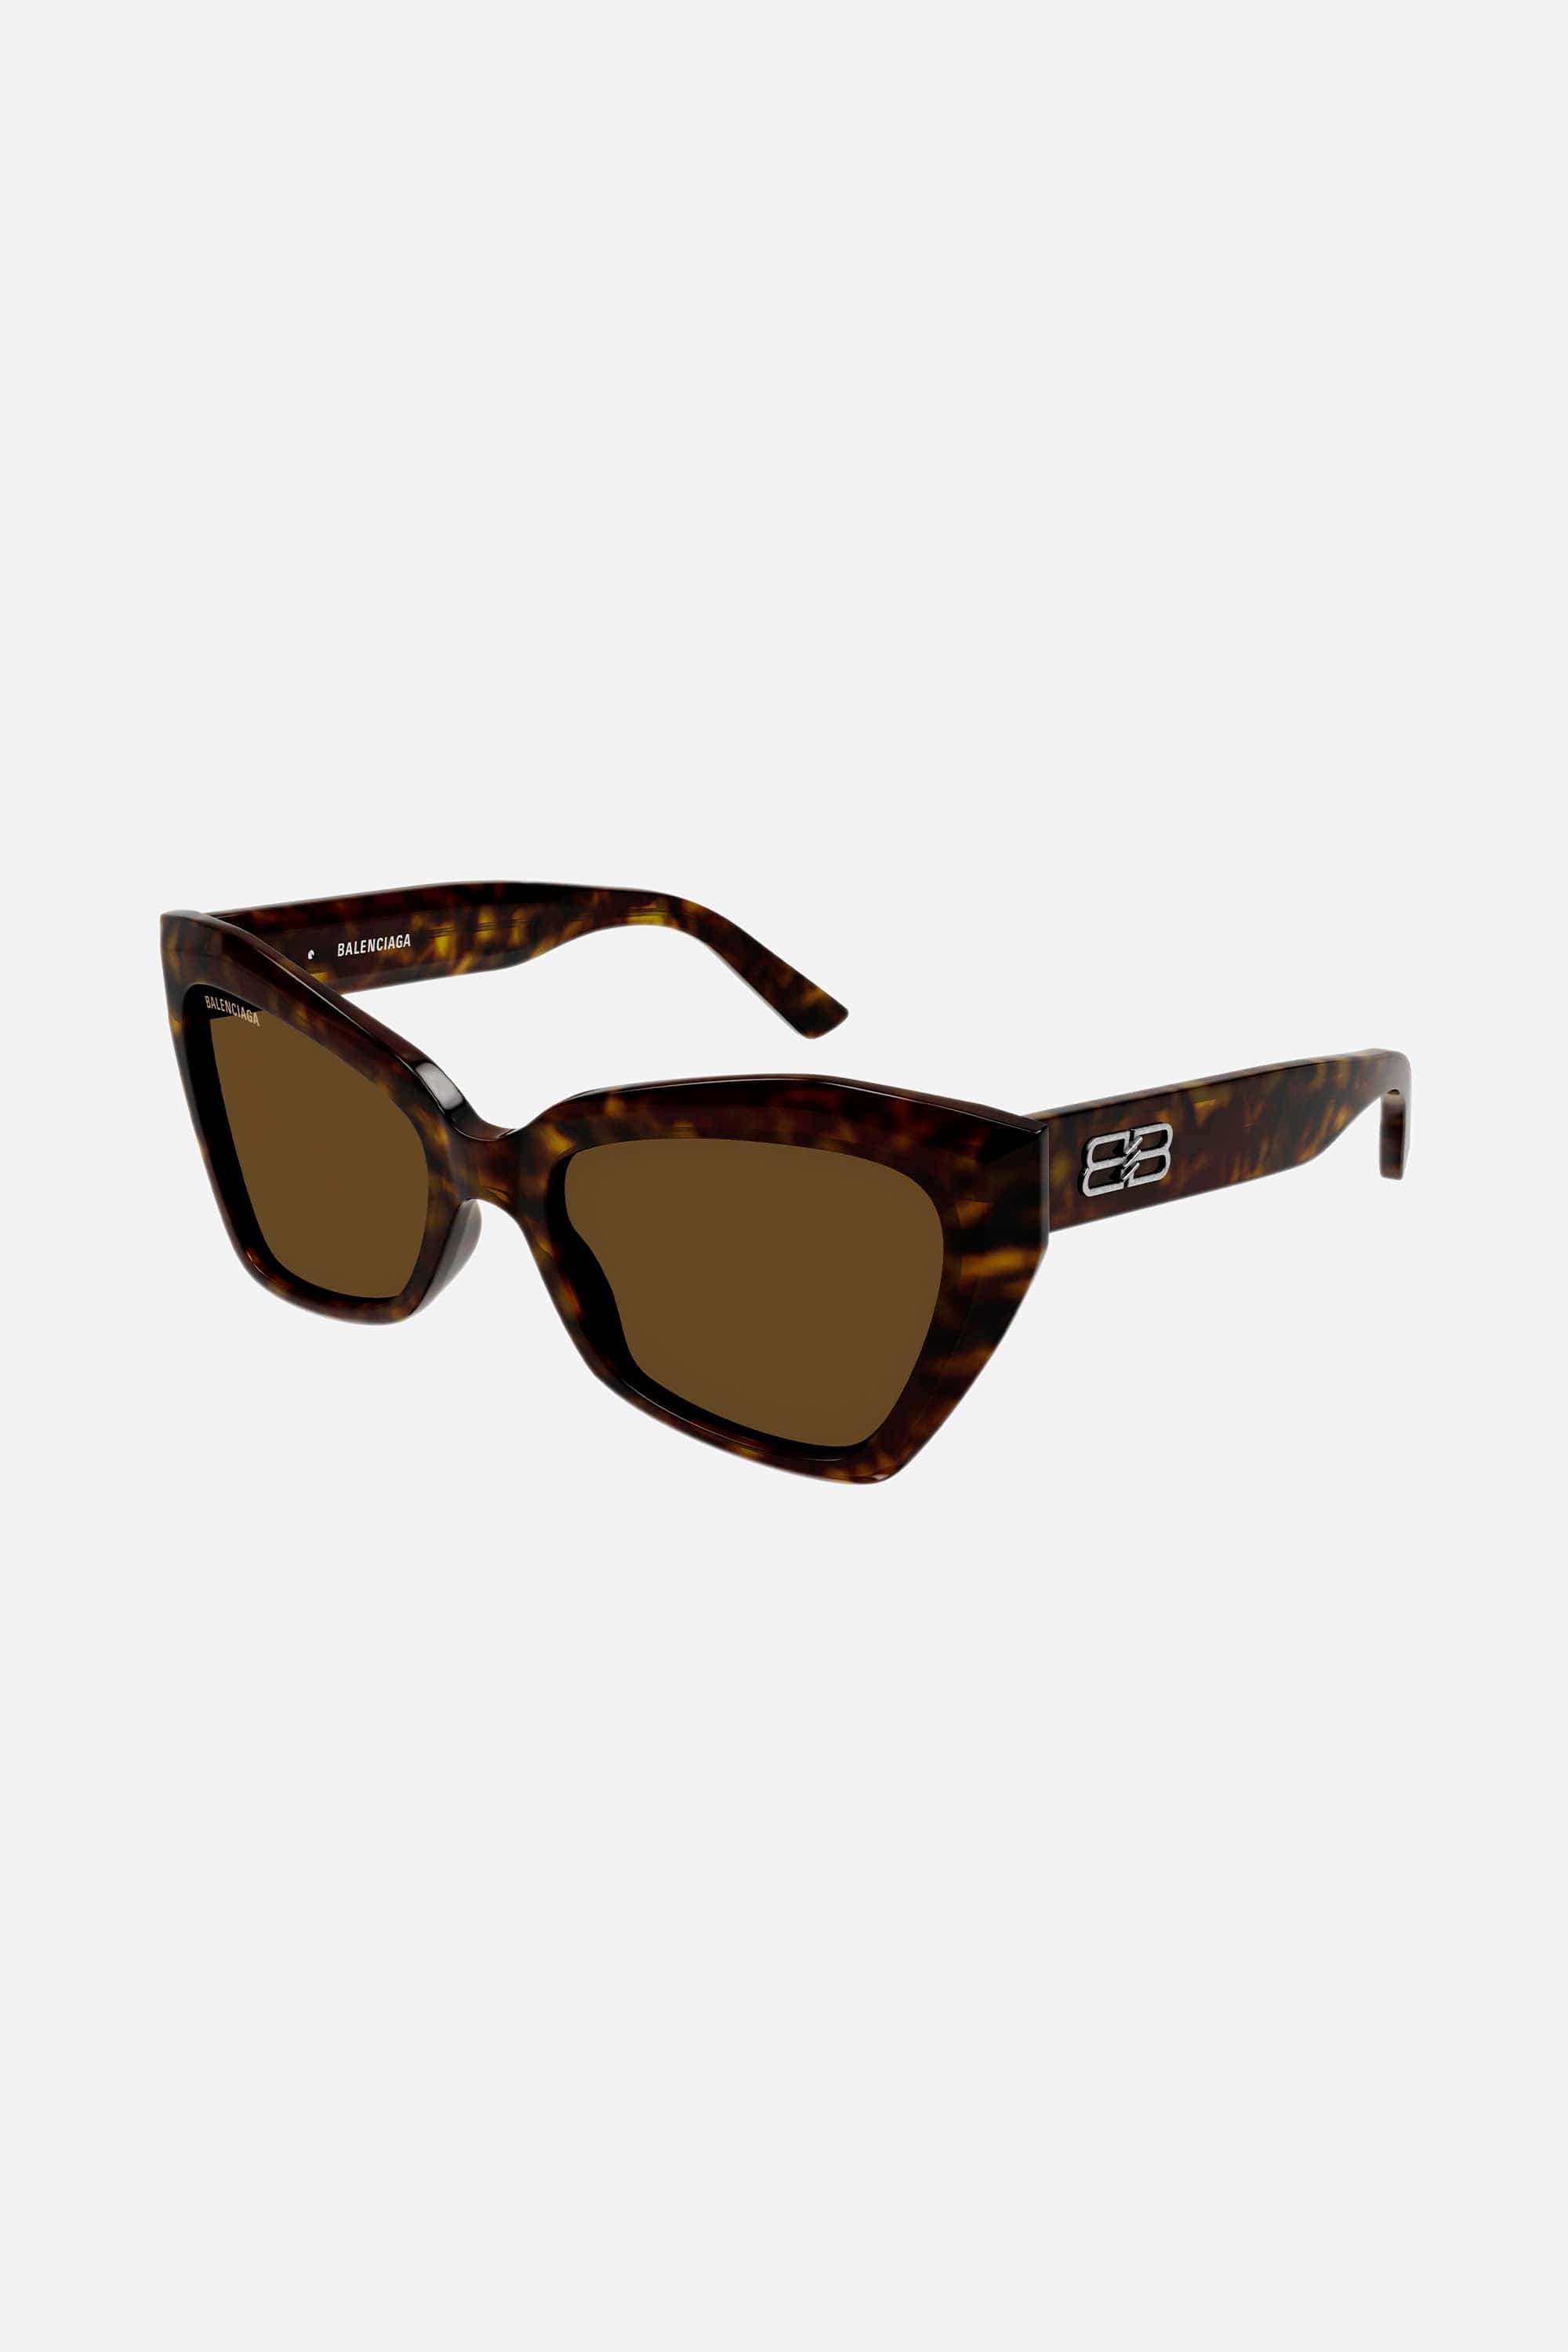 Balenciaga havana oversize cat-eye sunglasses with BB logo - Eyewear Club